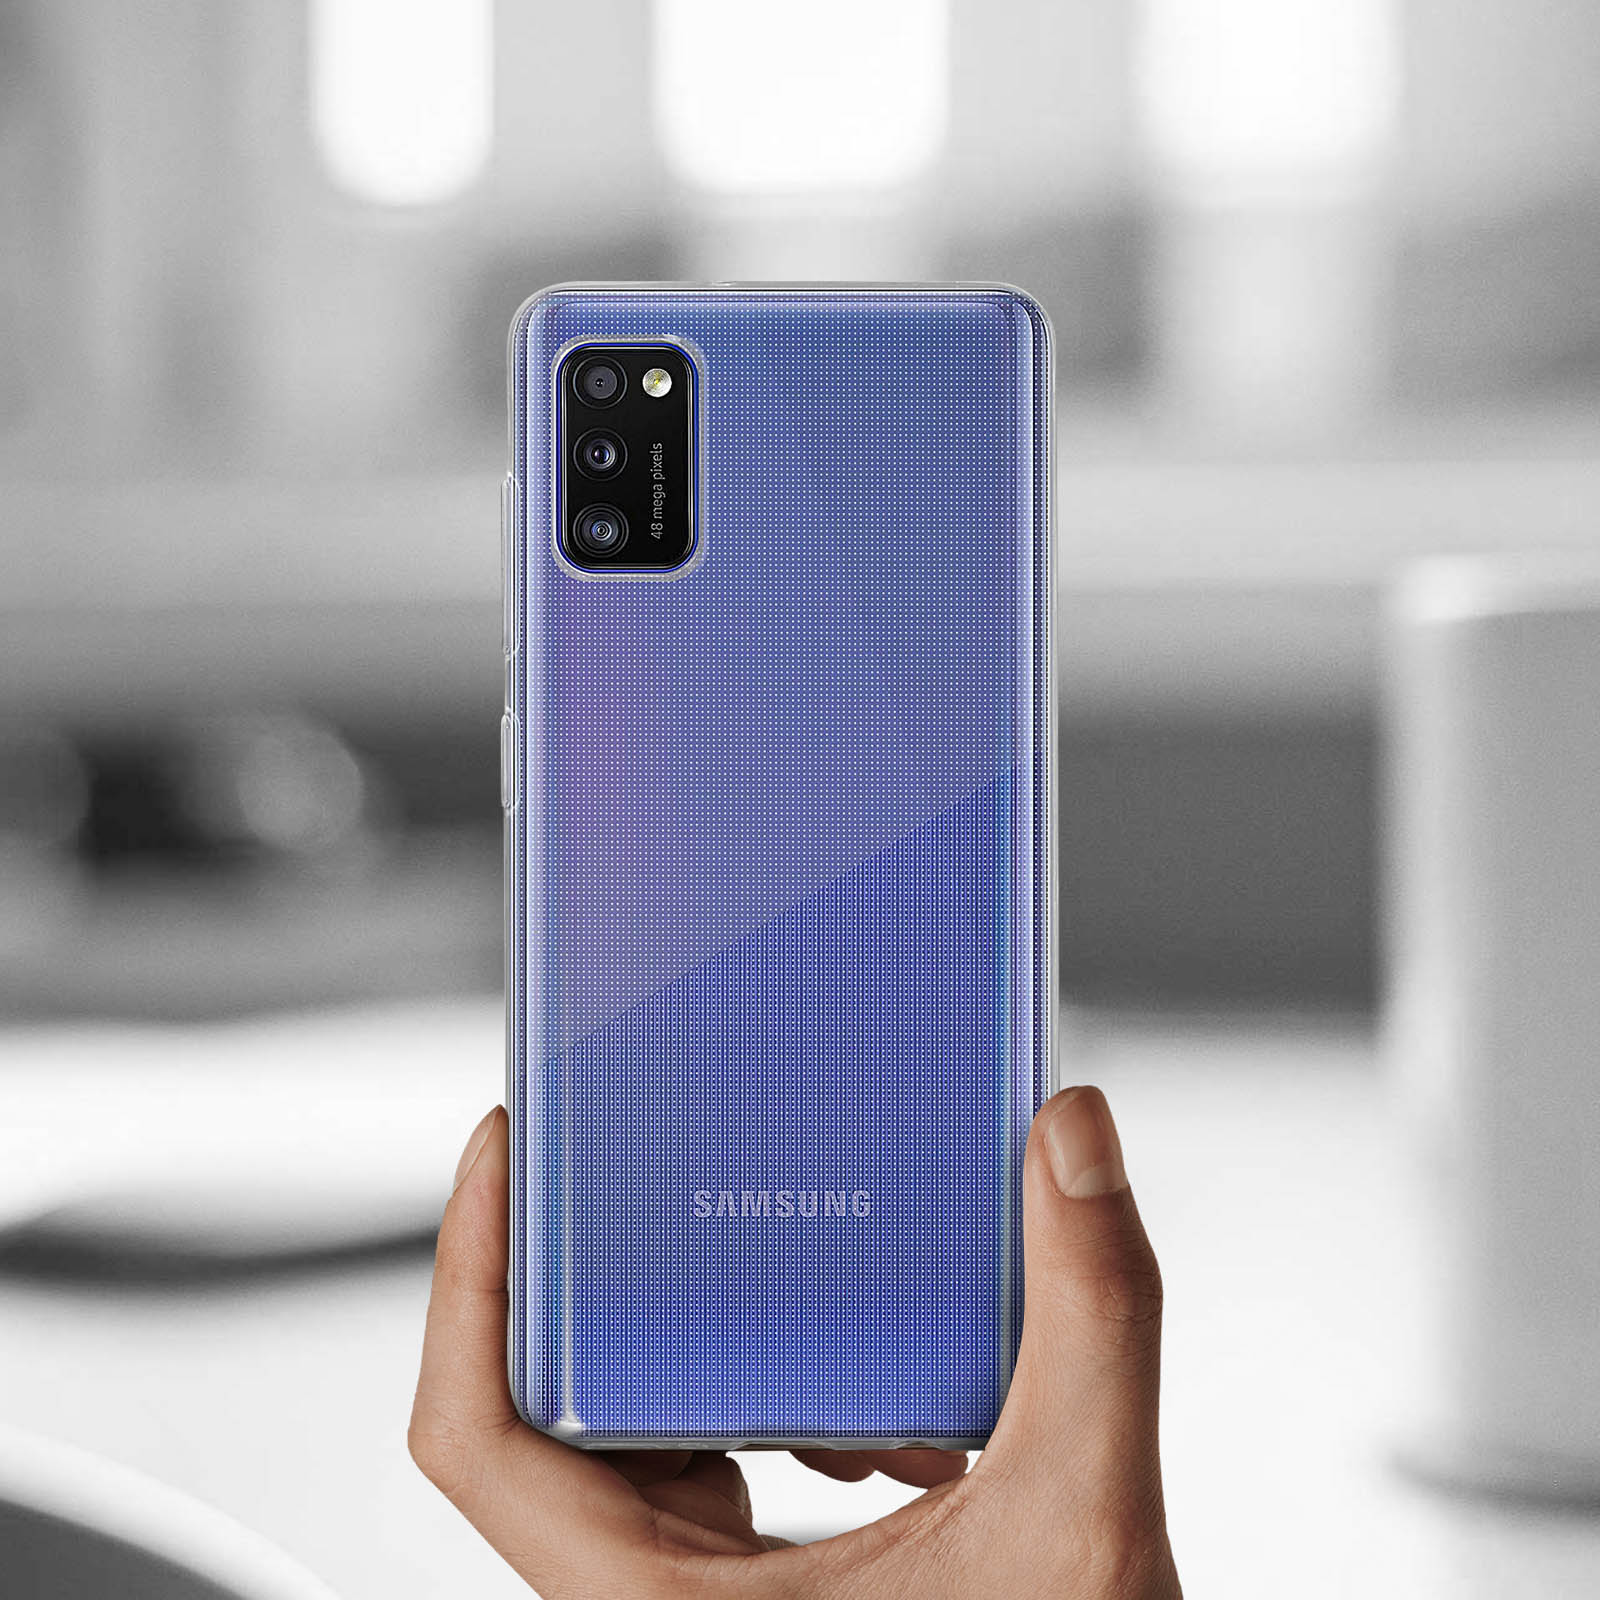 Film de protection en verre trempé pour Samsung Galaxy A41